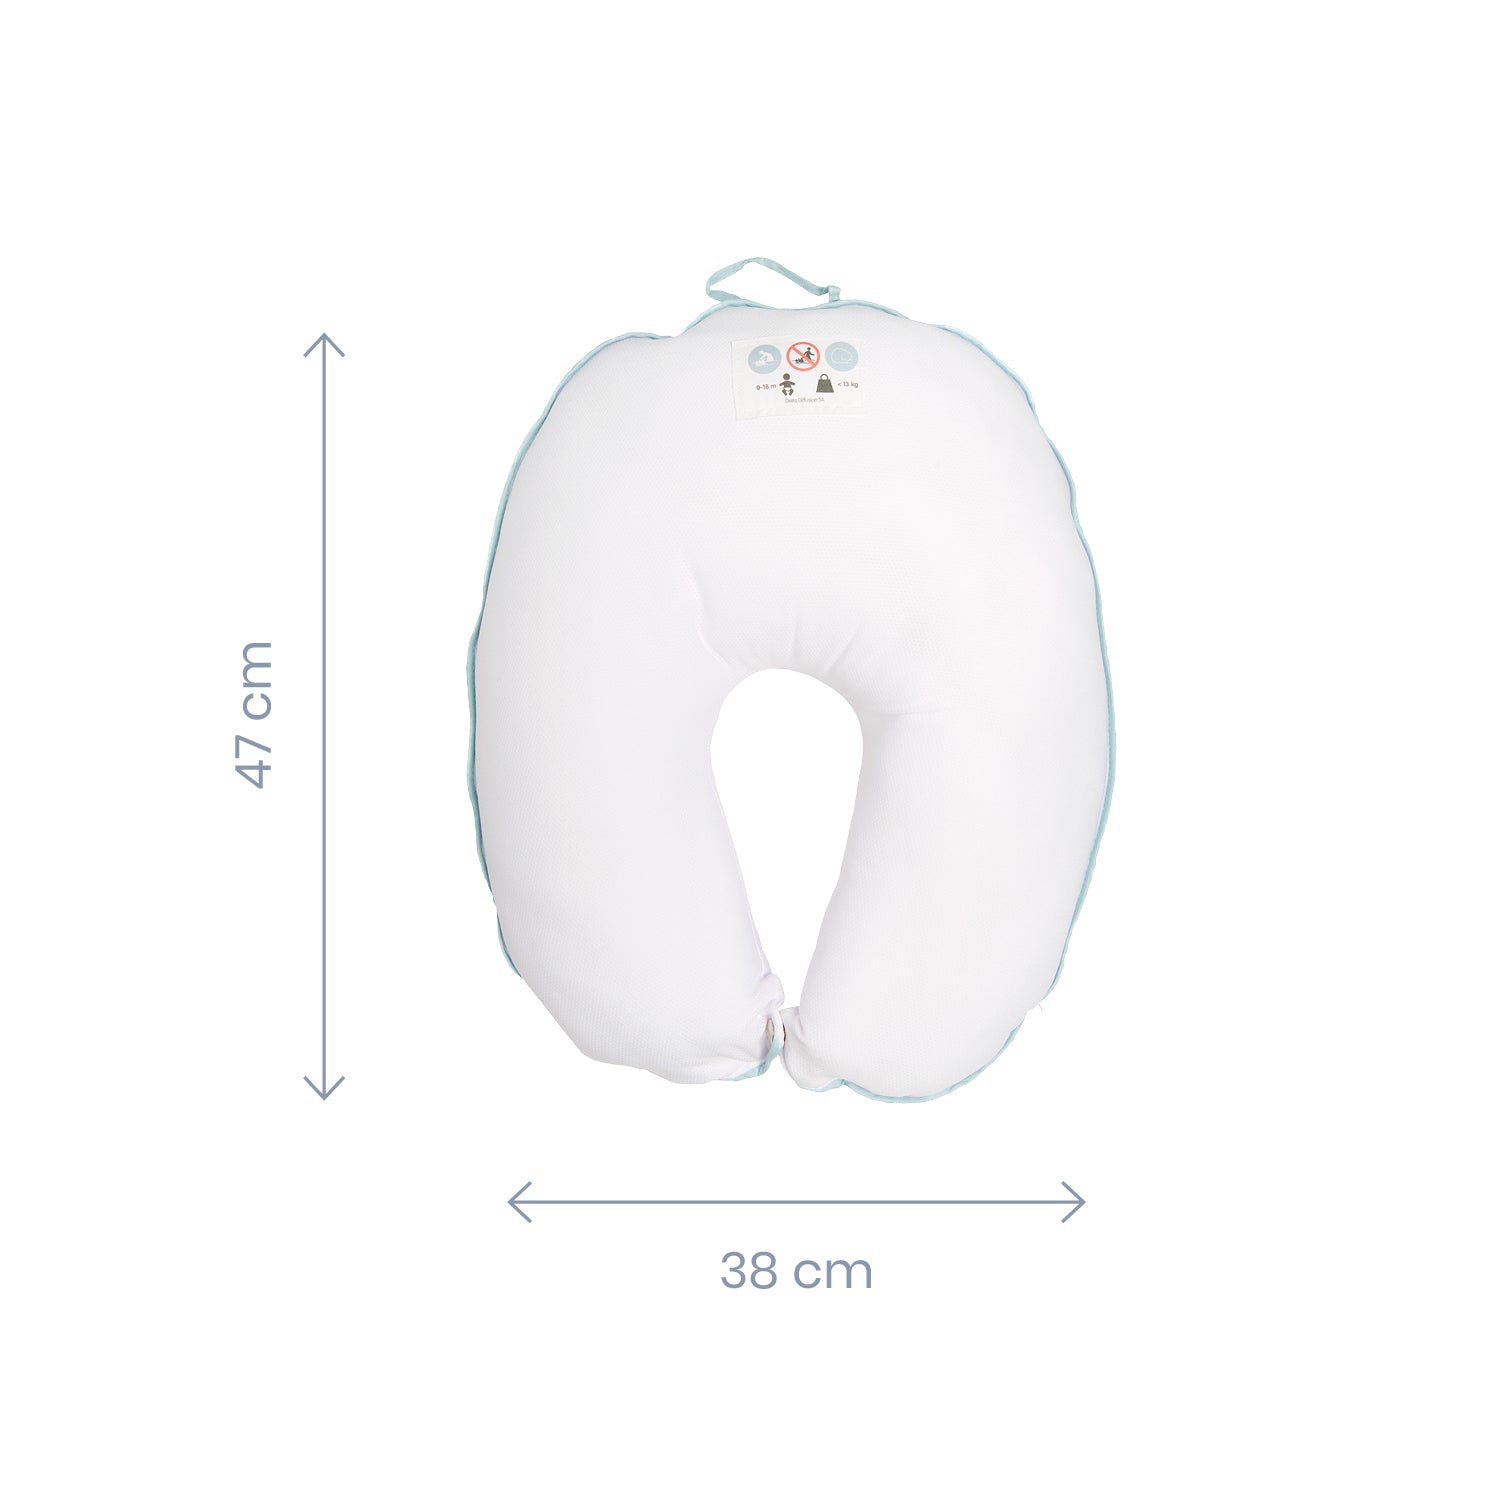 dimensions of doomoo comfy bath